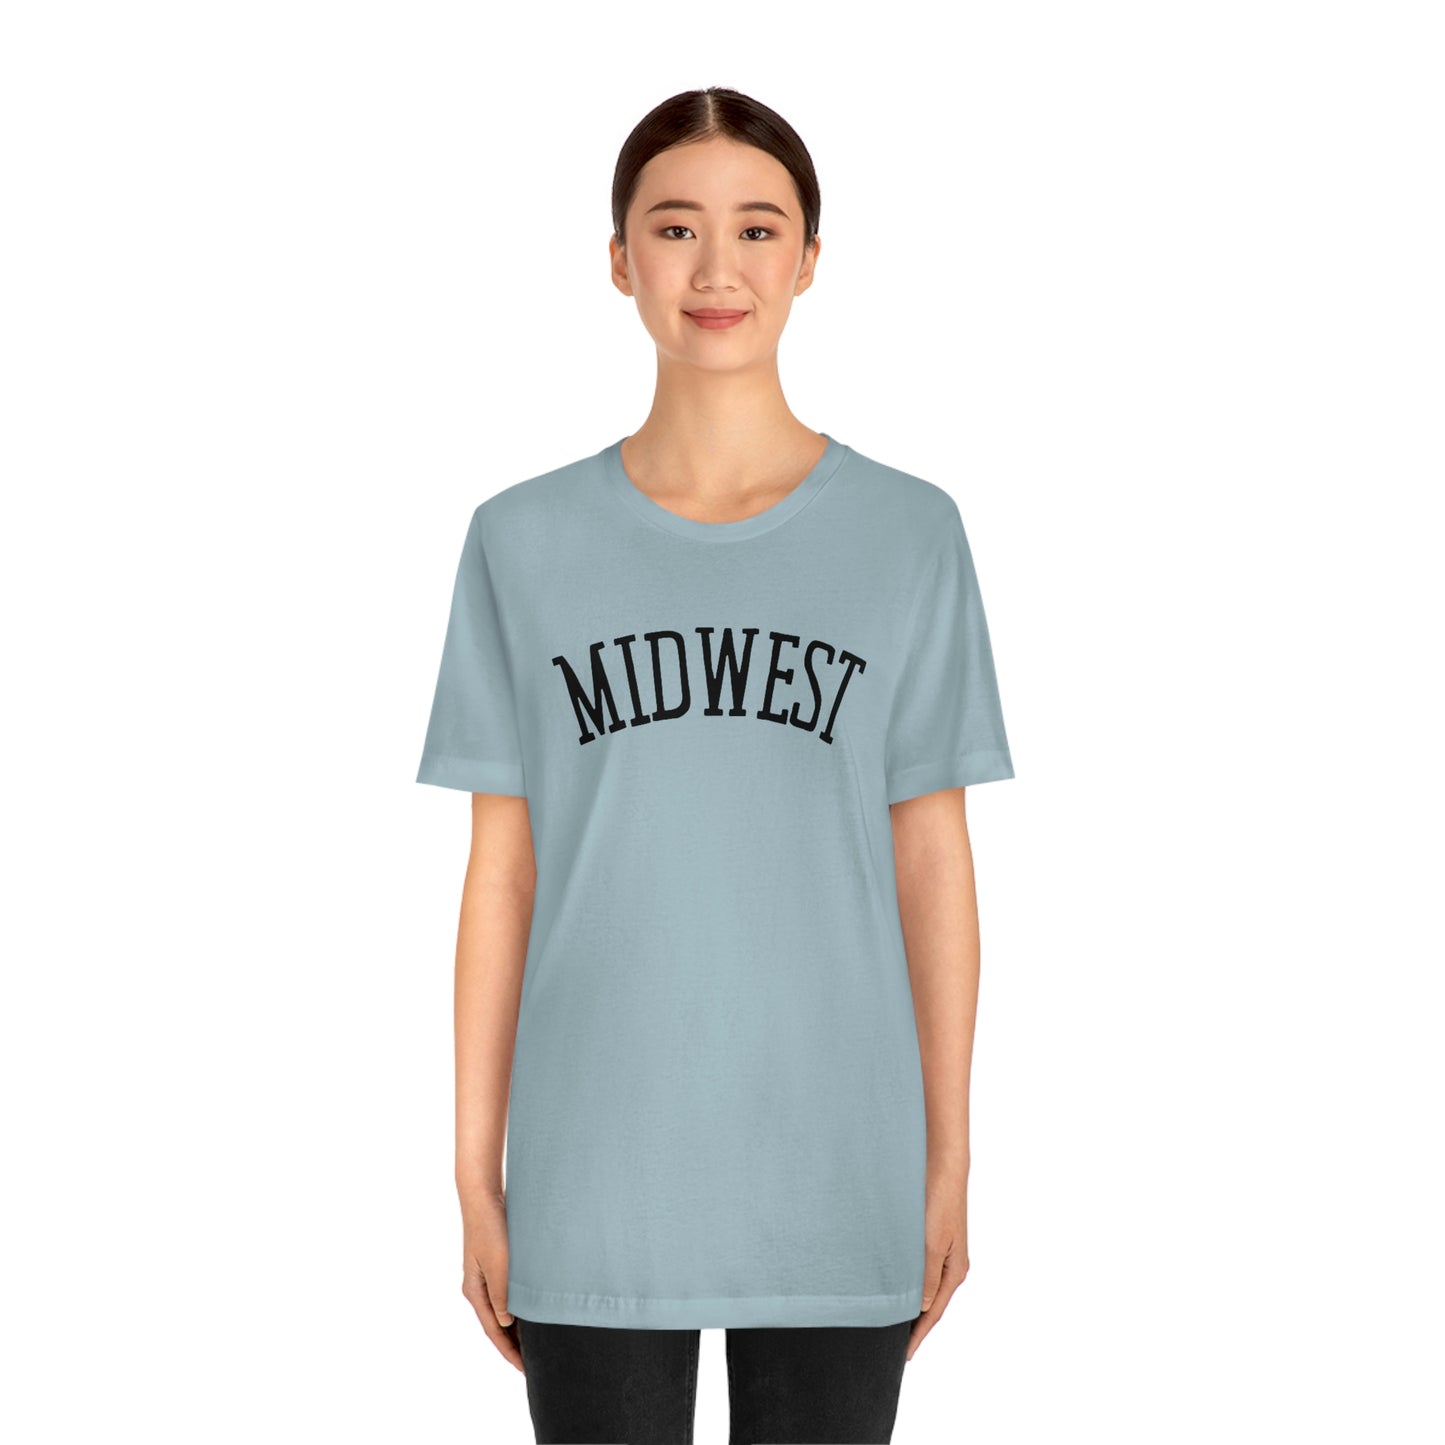 "Midwest" Unisex Jersey Short Sleeve Tee